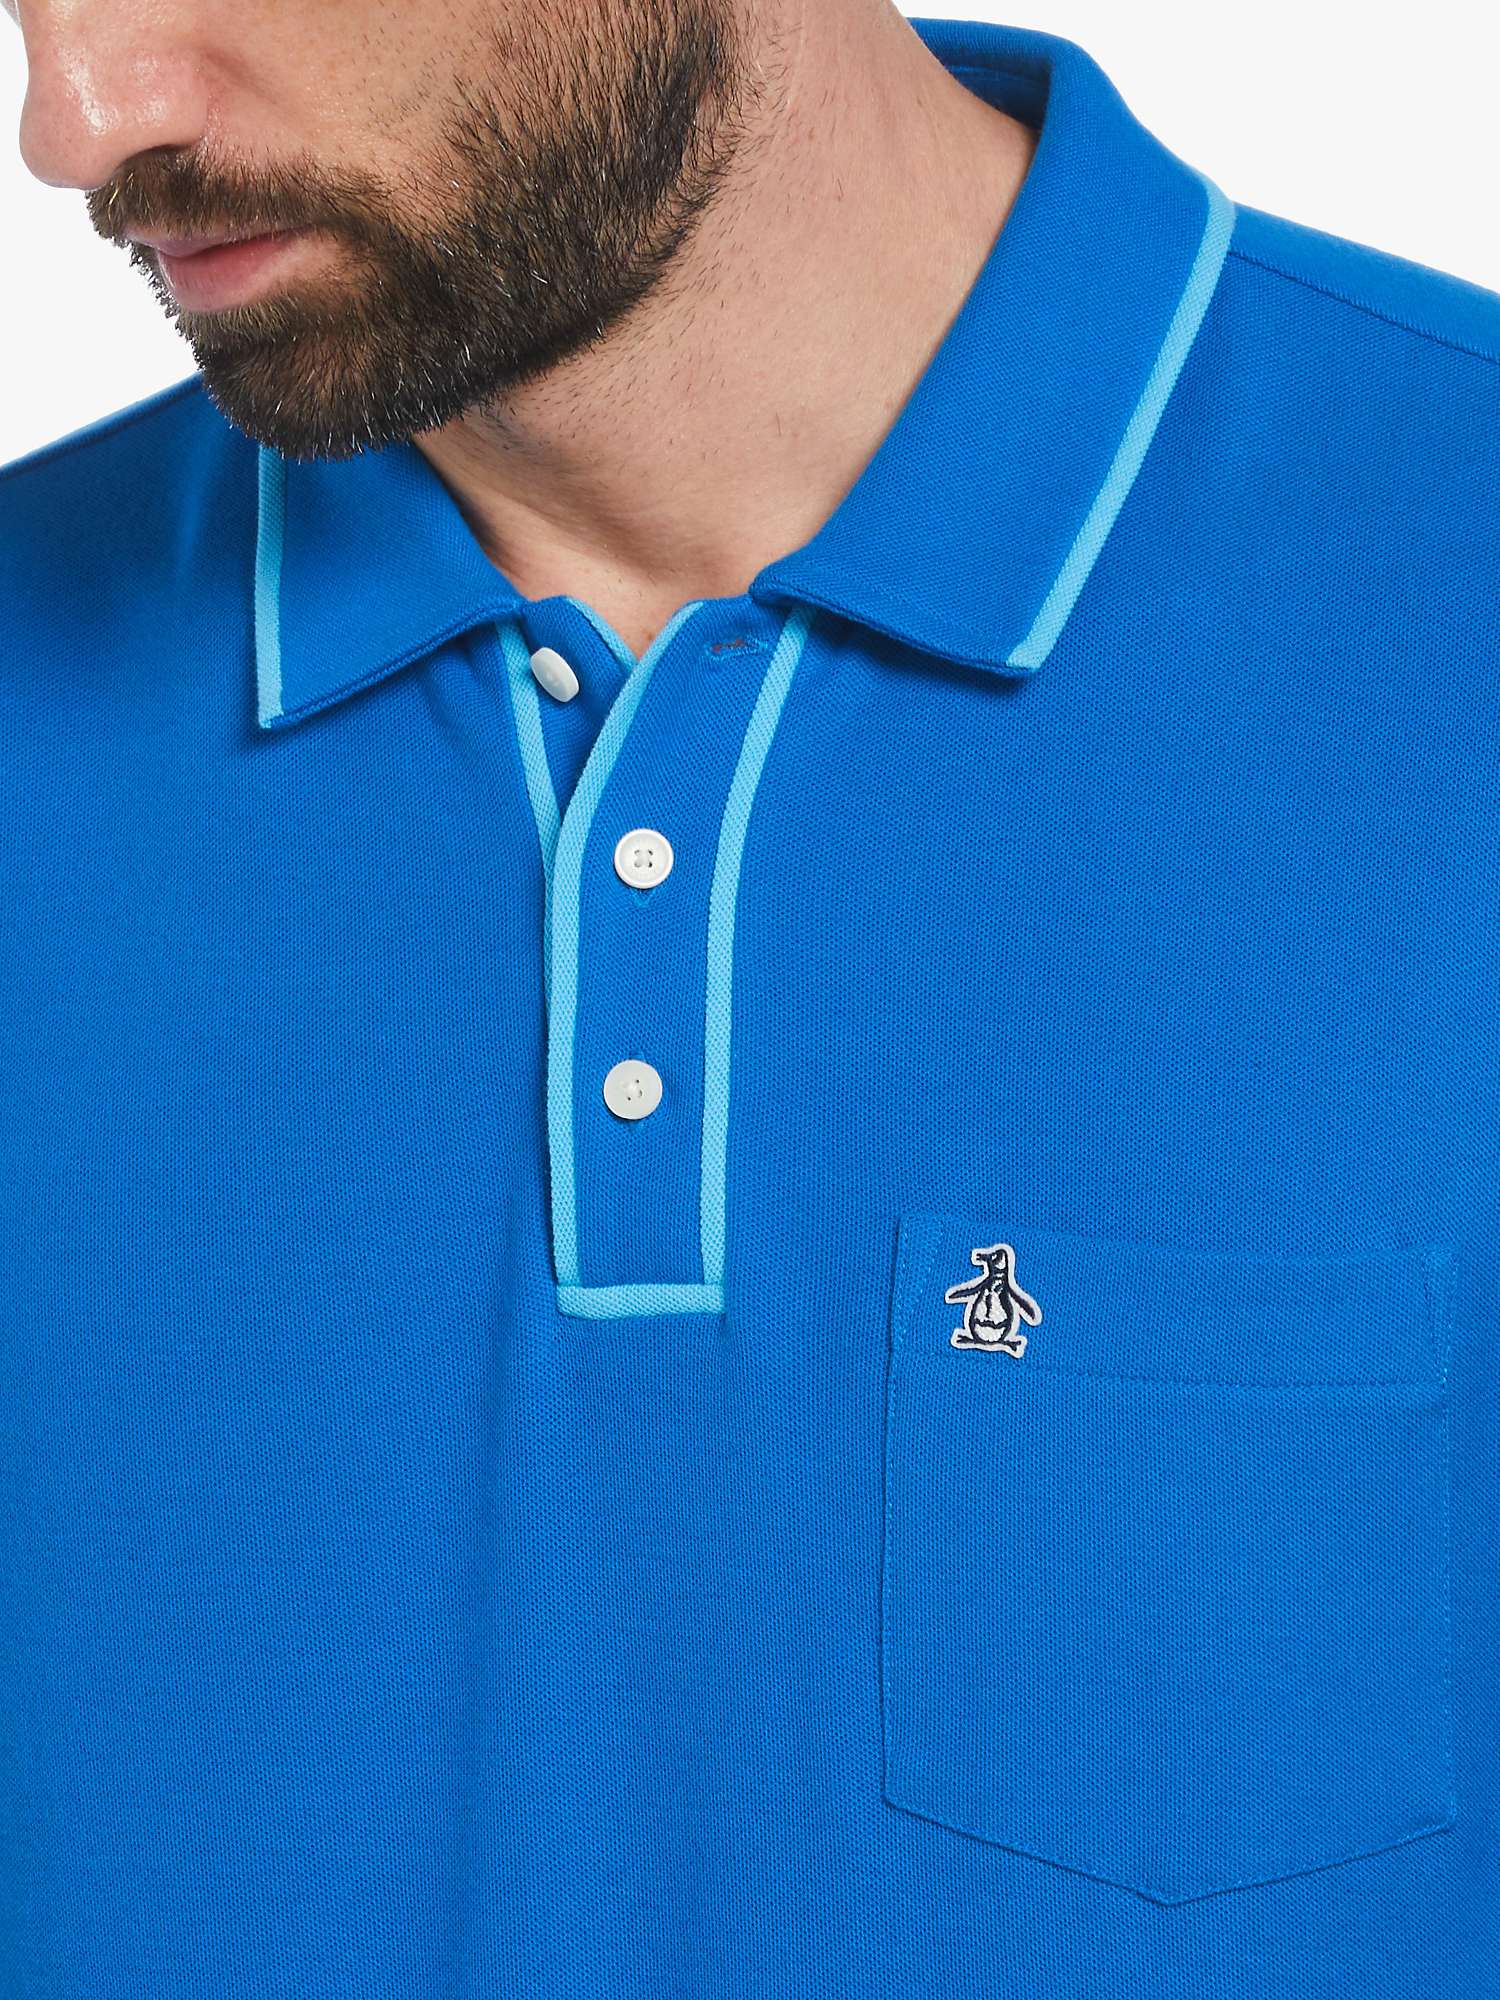 Buy Original Penguin Earl Short Sleeve Polo Shirt, Blue Online at johnlewis.com